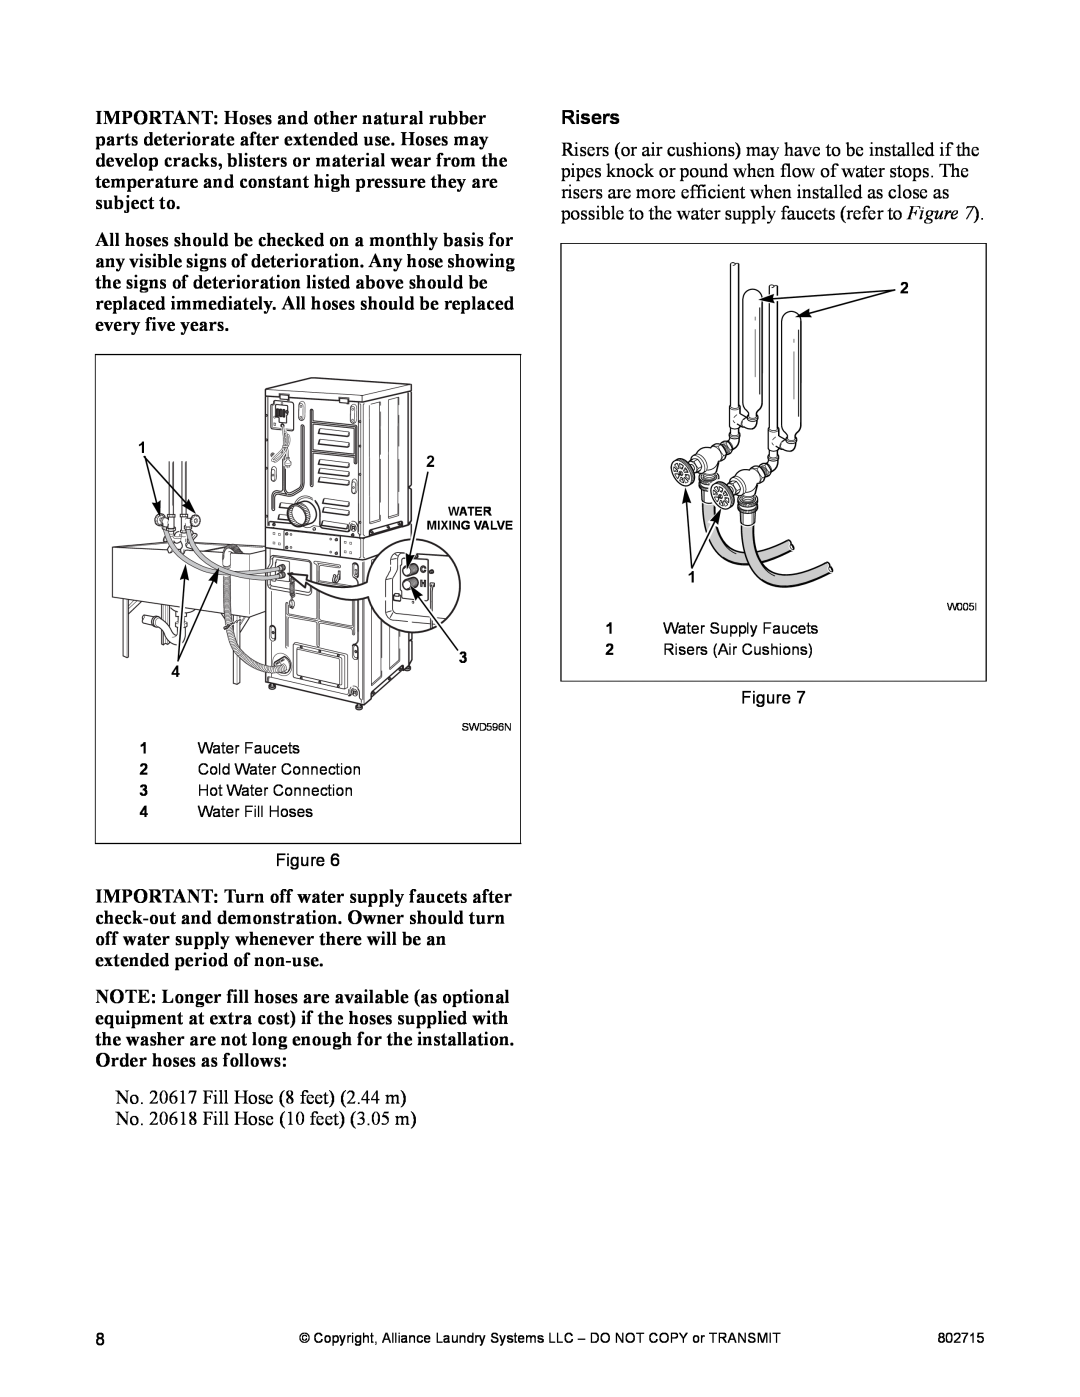 Alliance Laundry Systems Dishwasher manual No. 20617 Fill Hose 8 feet 2.44 m No. 20618 Fill Hose 10 feet 3.05 m, Risers 